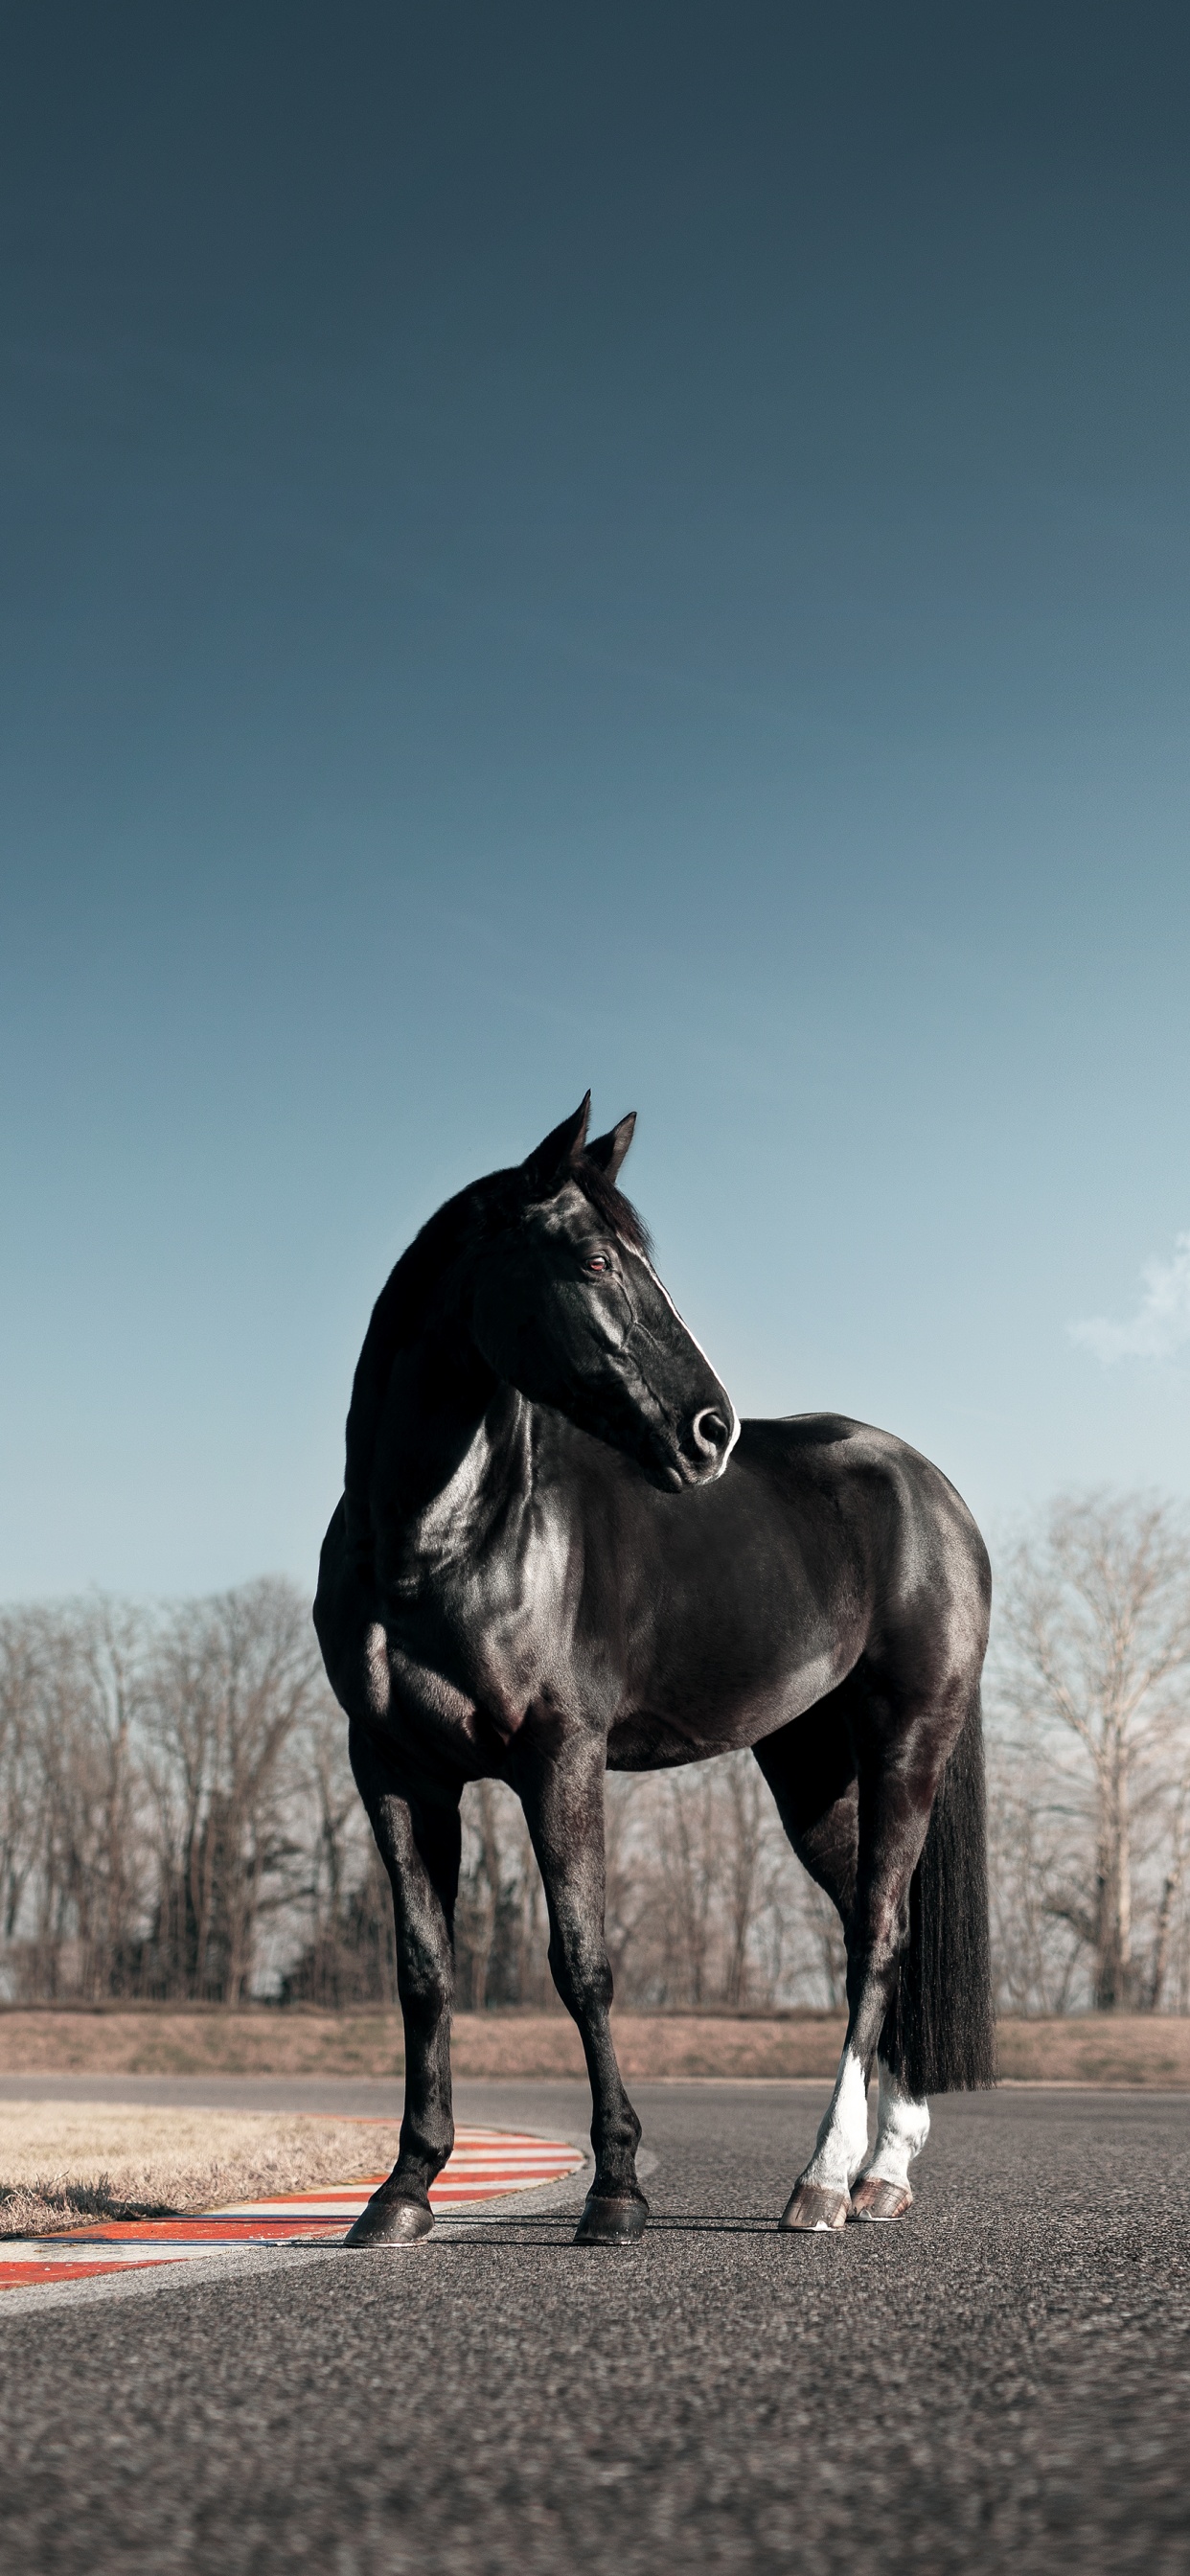 Black Horse iPhone Wallpaper